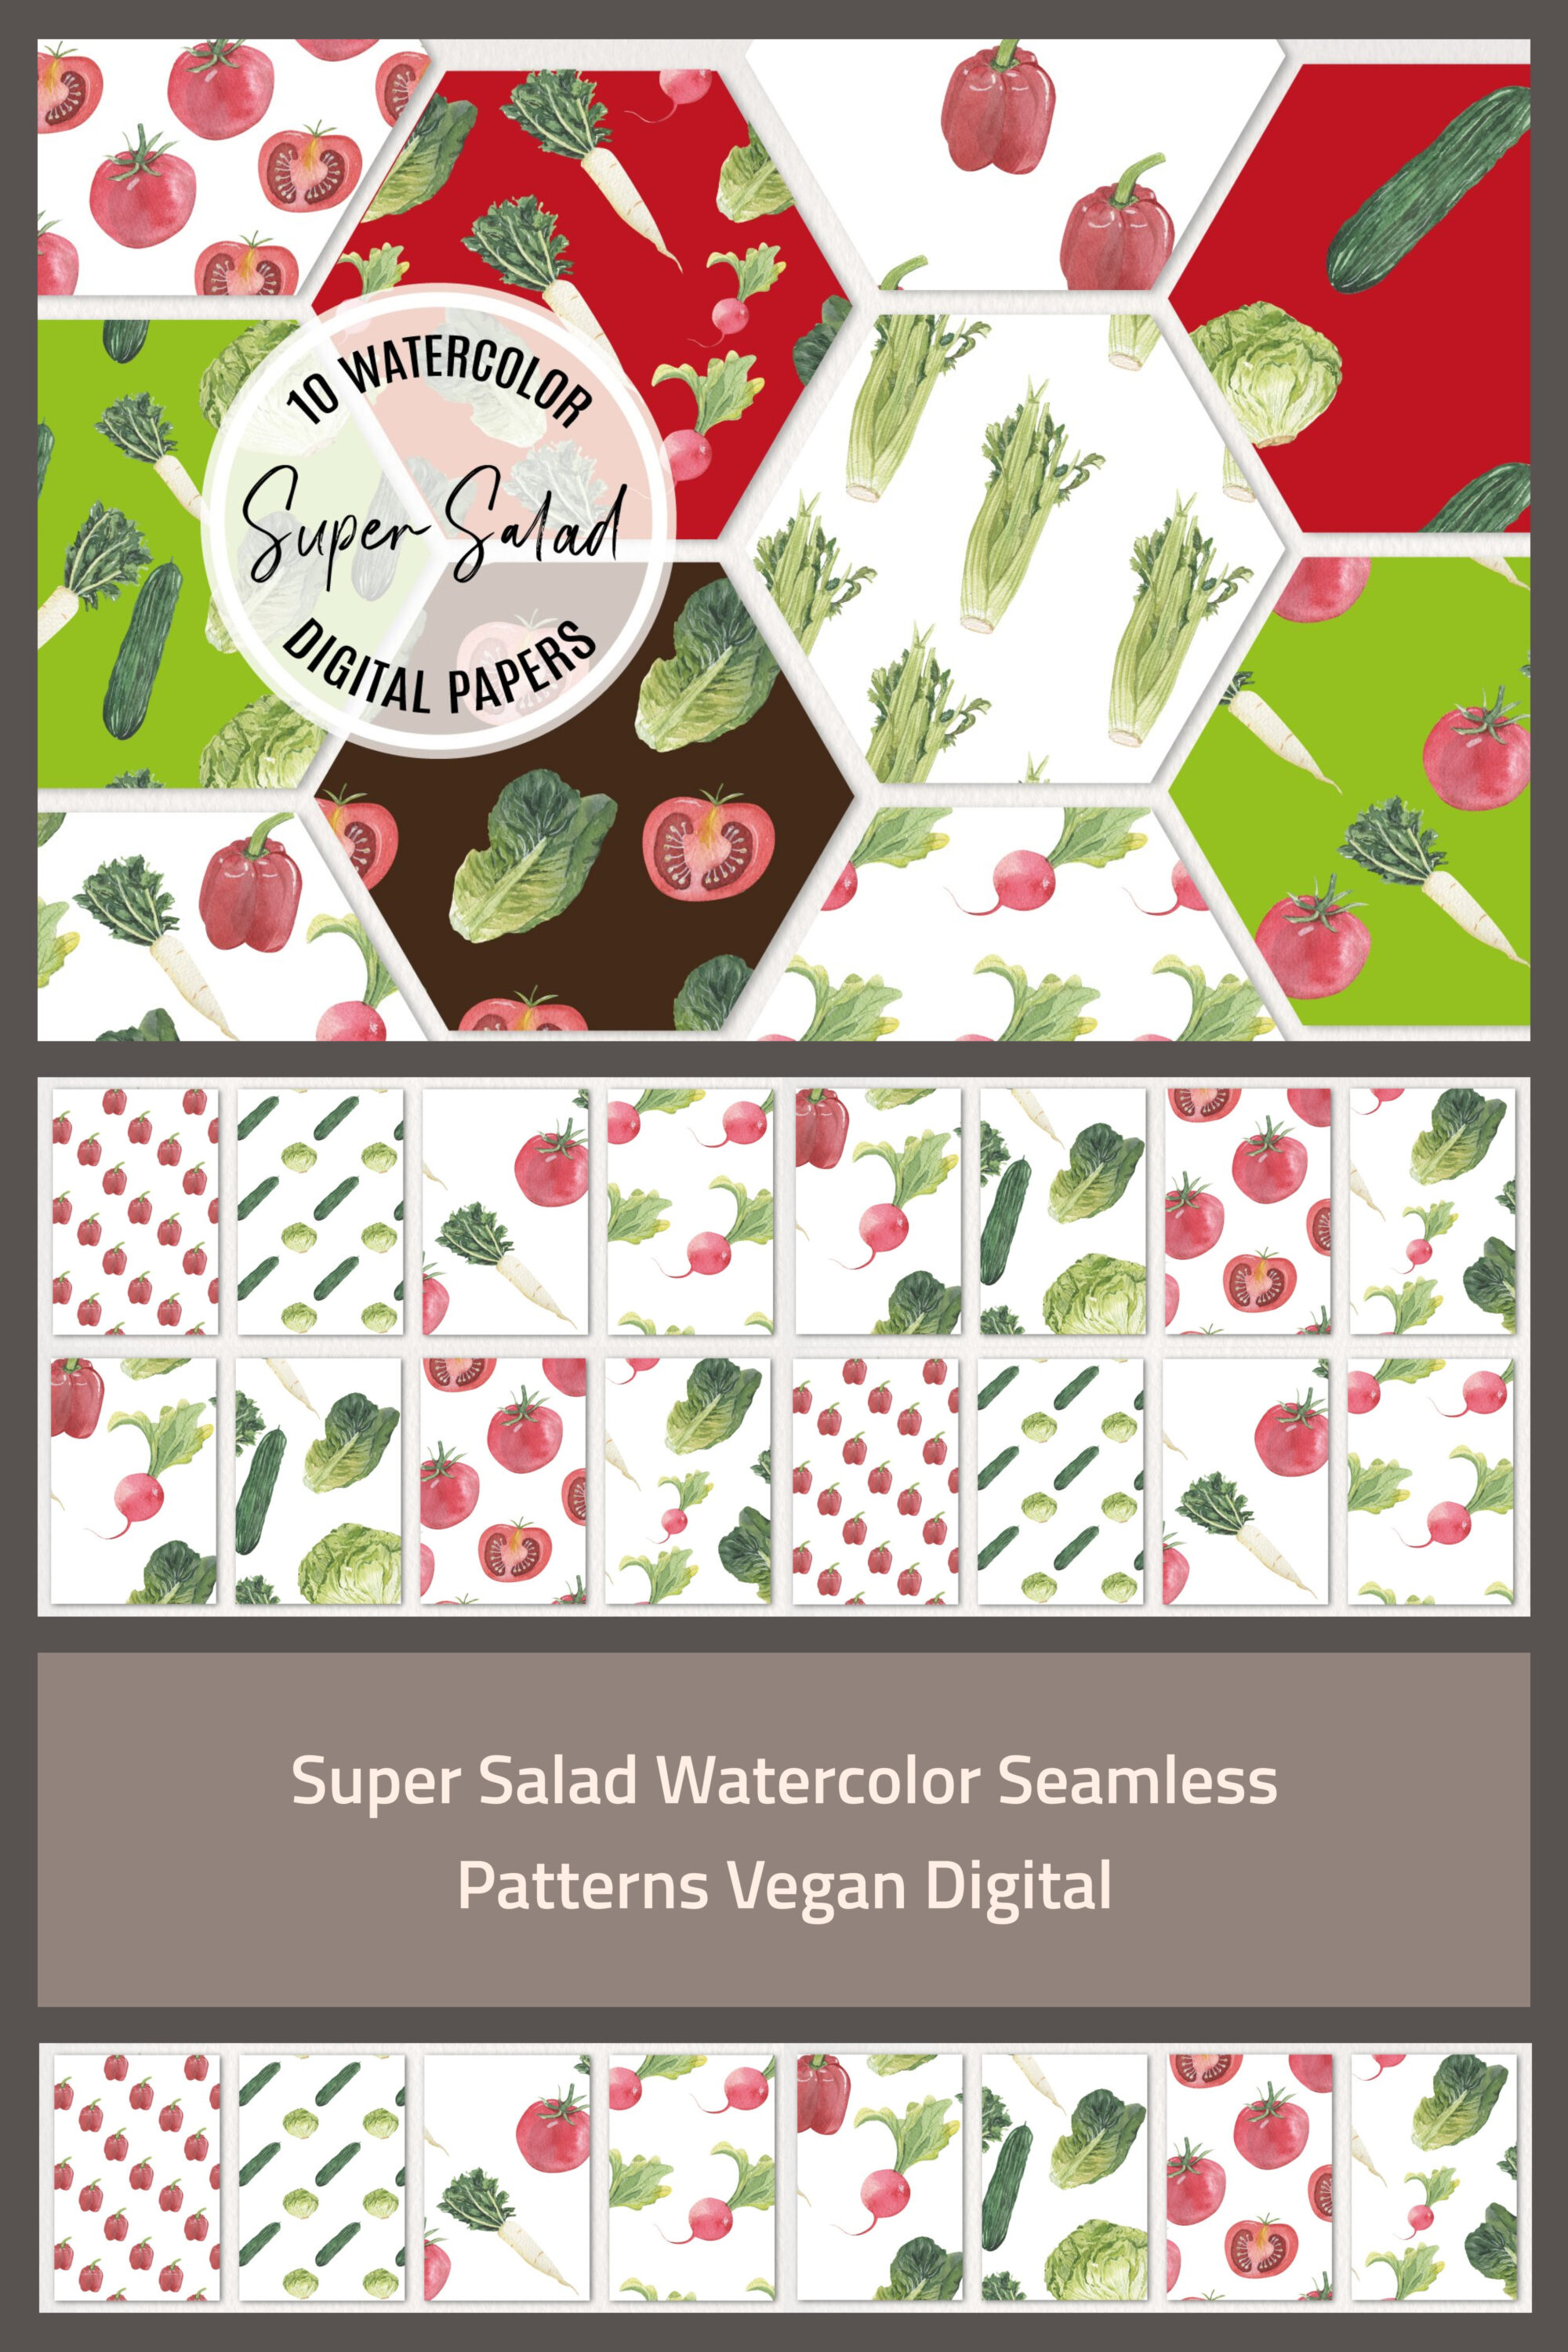 Super salad watercolor seamless patterns vegan digital of pinterest.